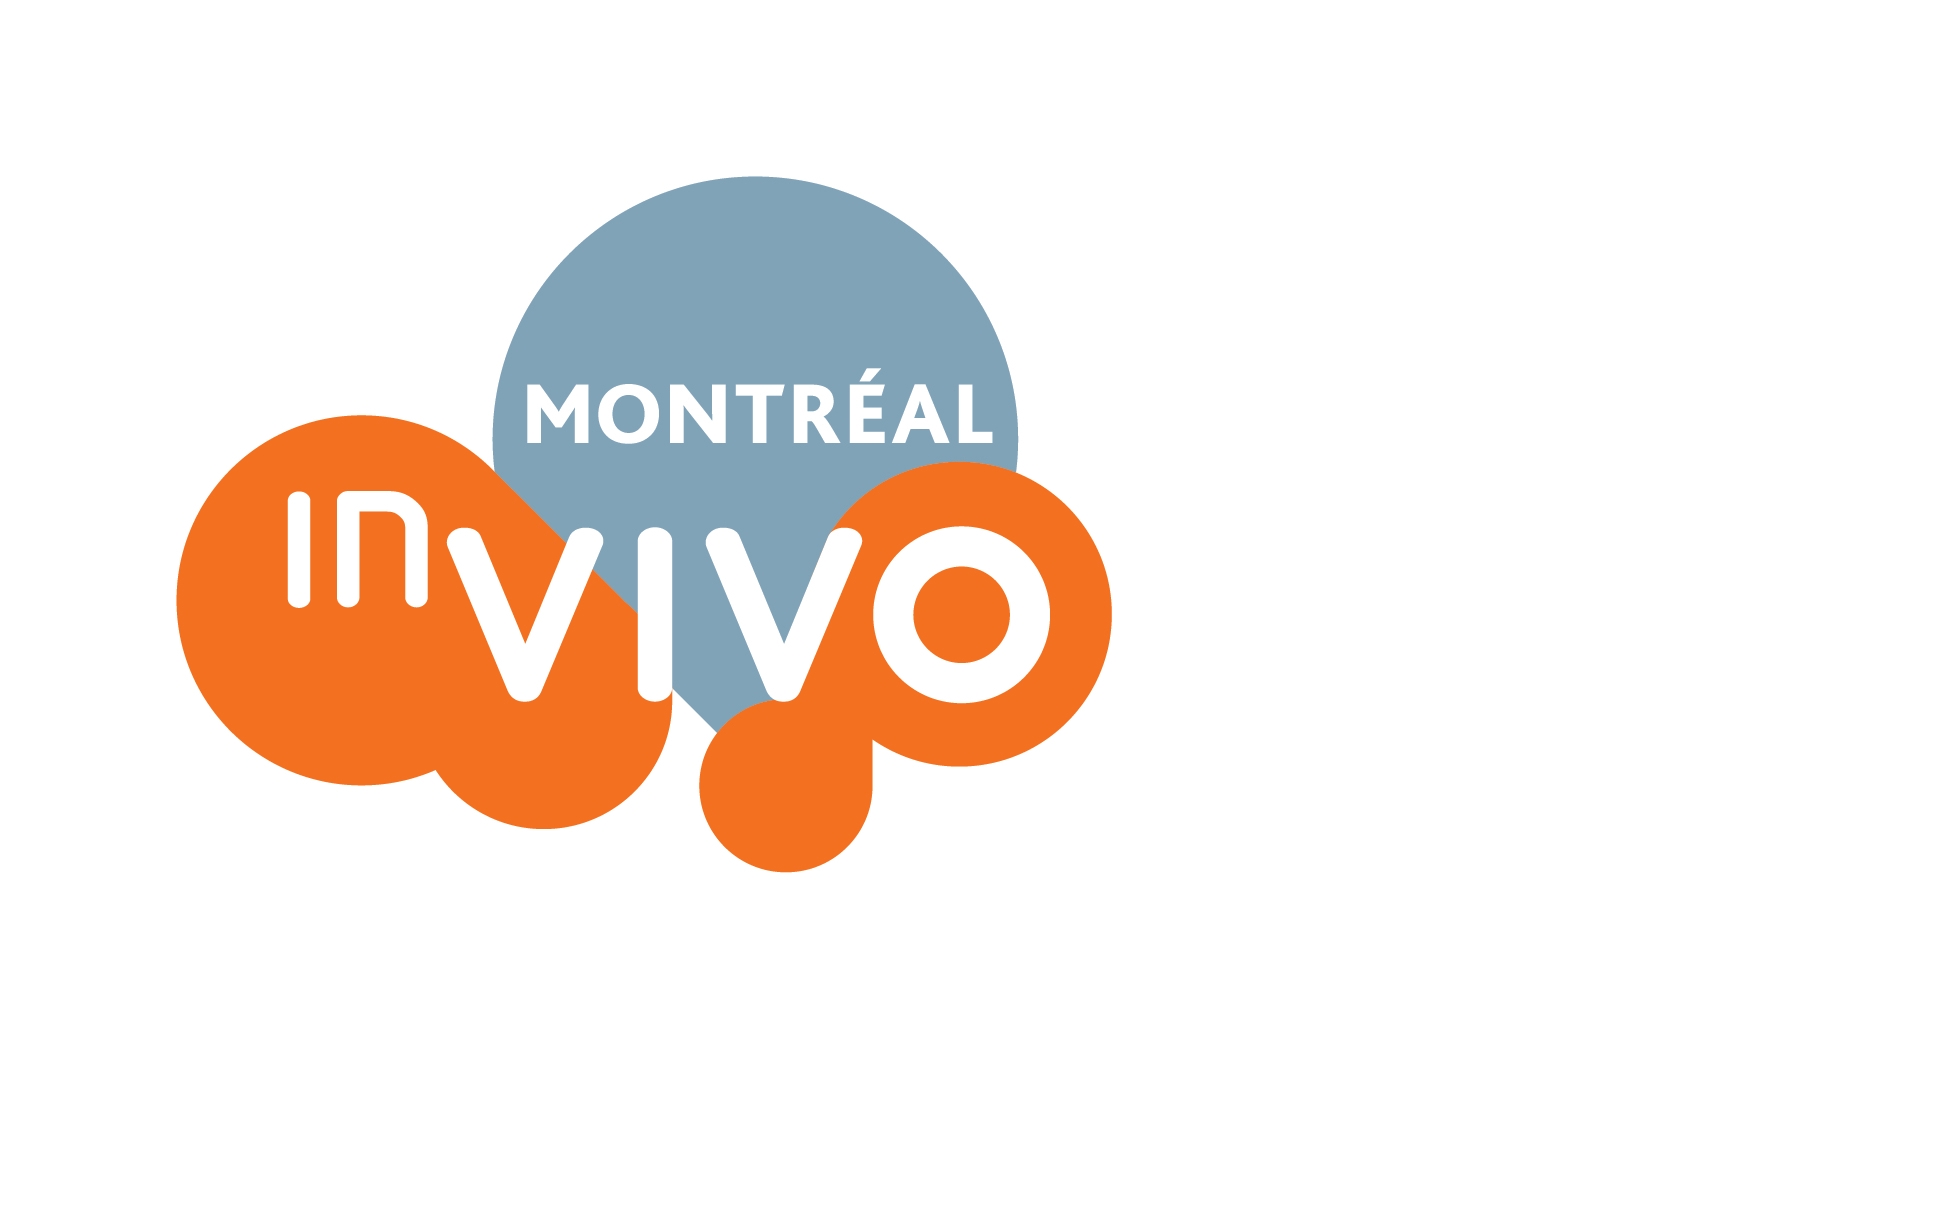 Montréal InVivo